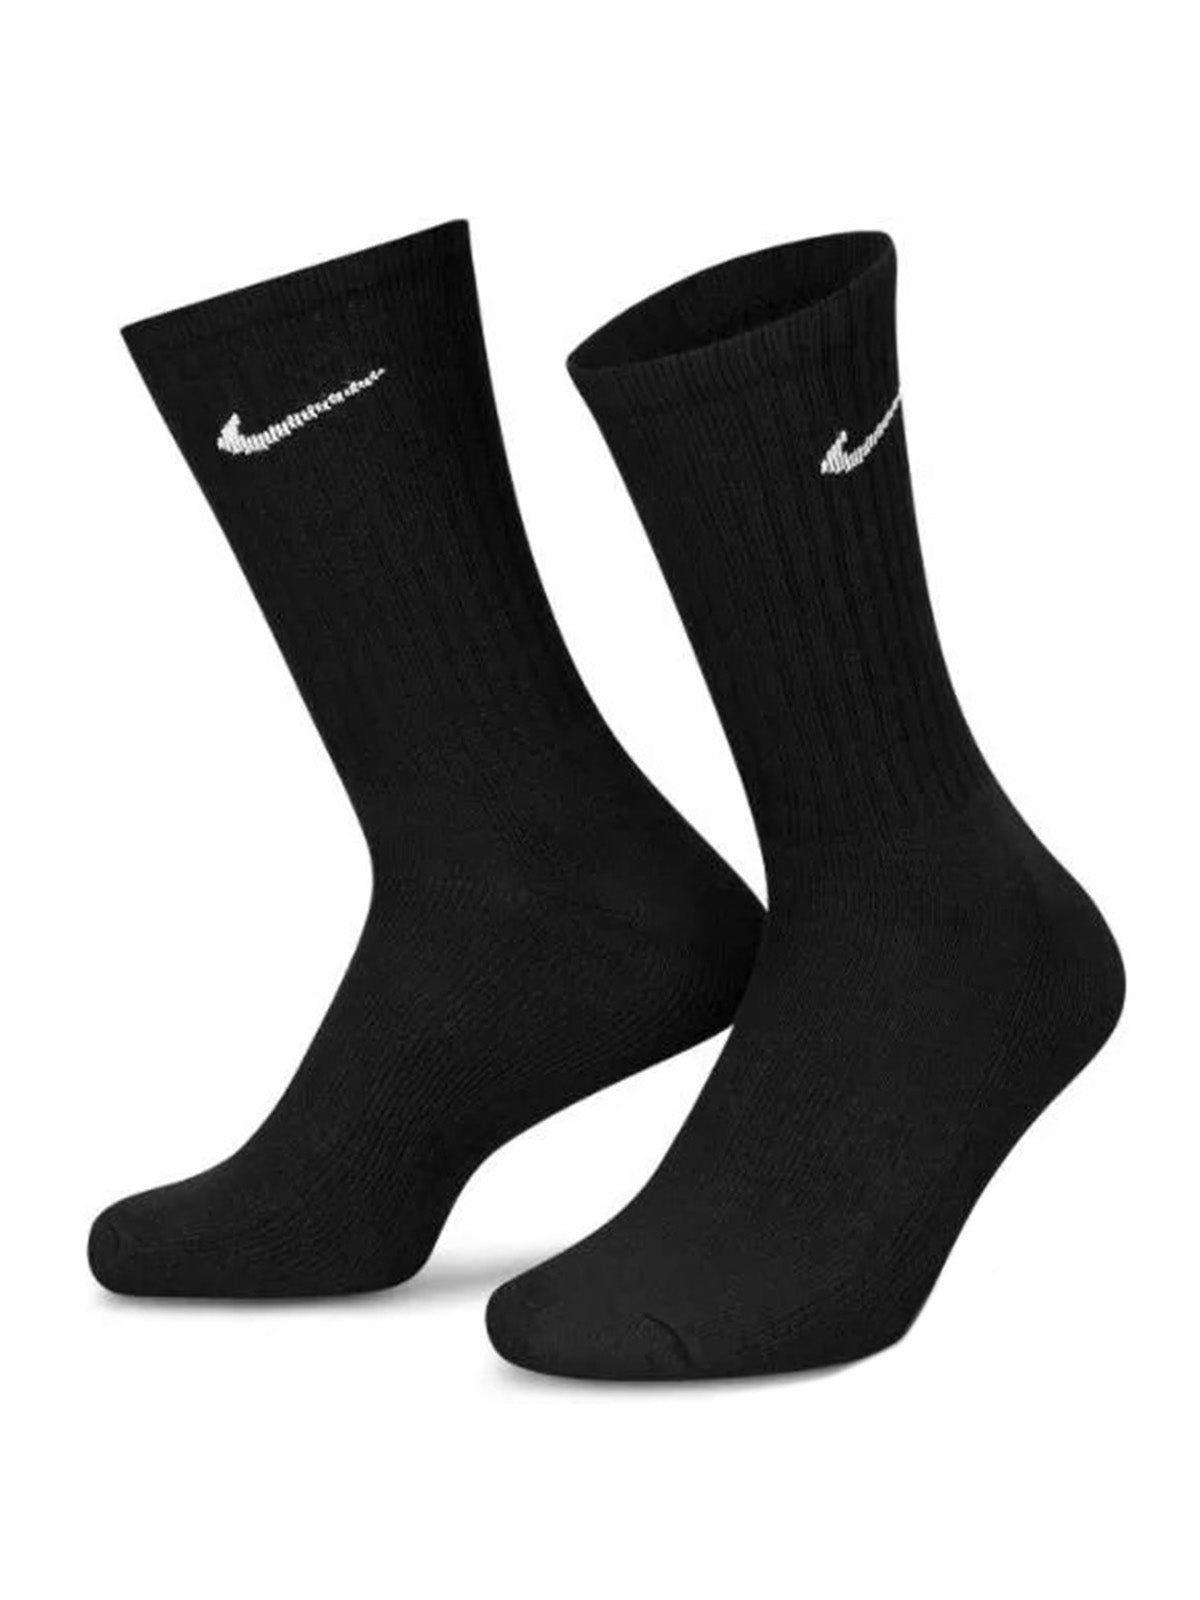 Calze Unisex Nike - Nike Cushioned Crew 3Pp Socks - Nero